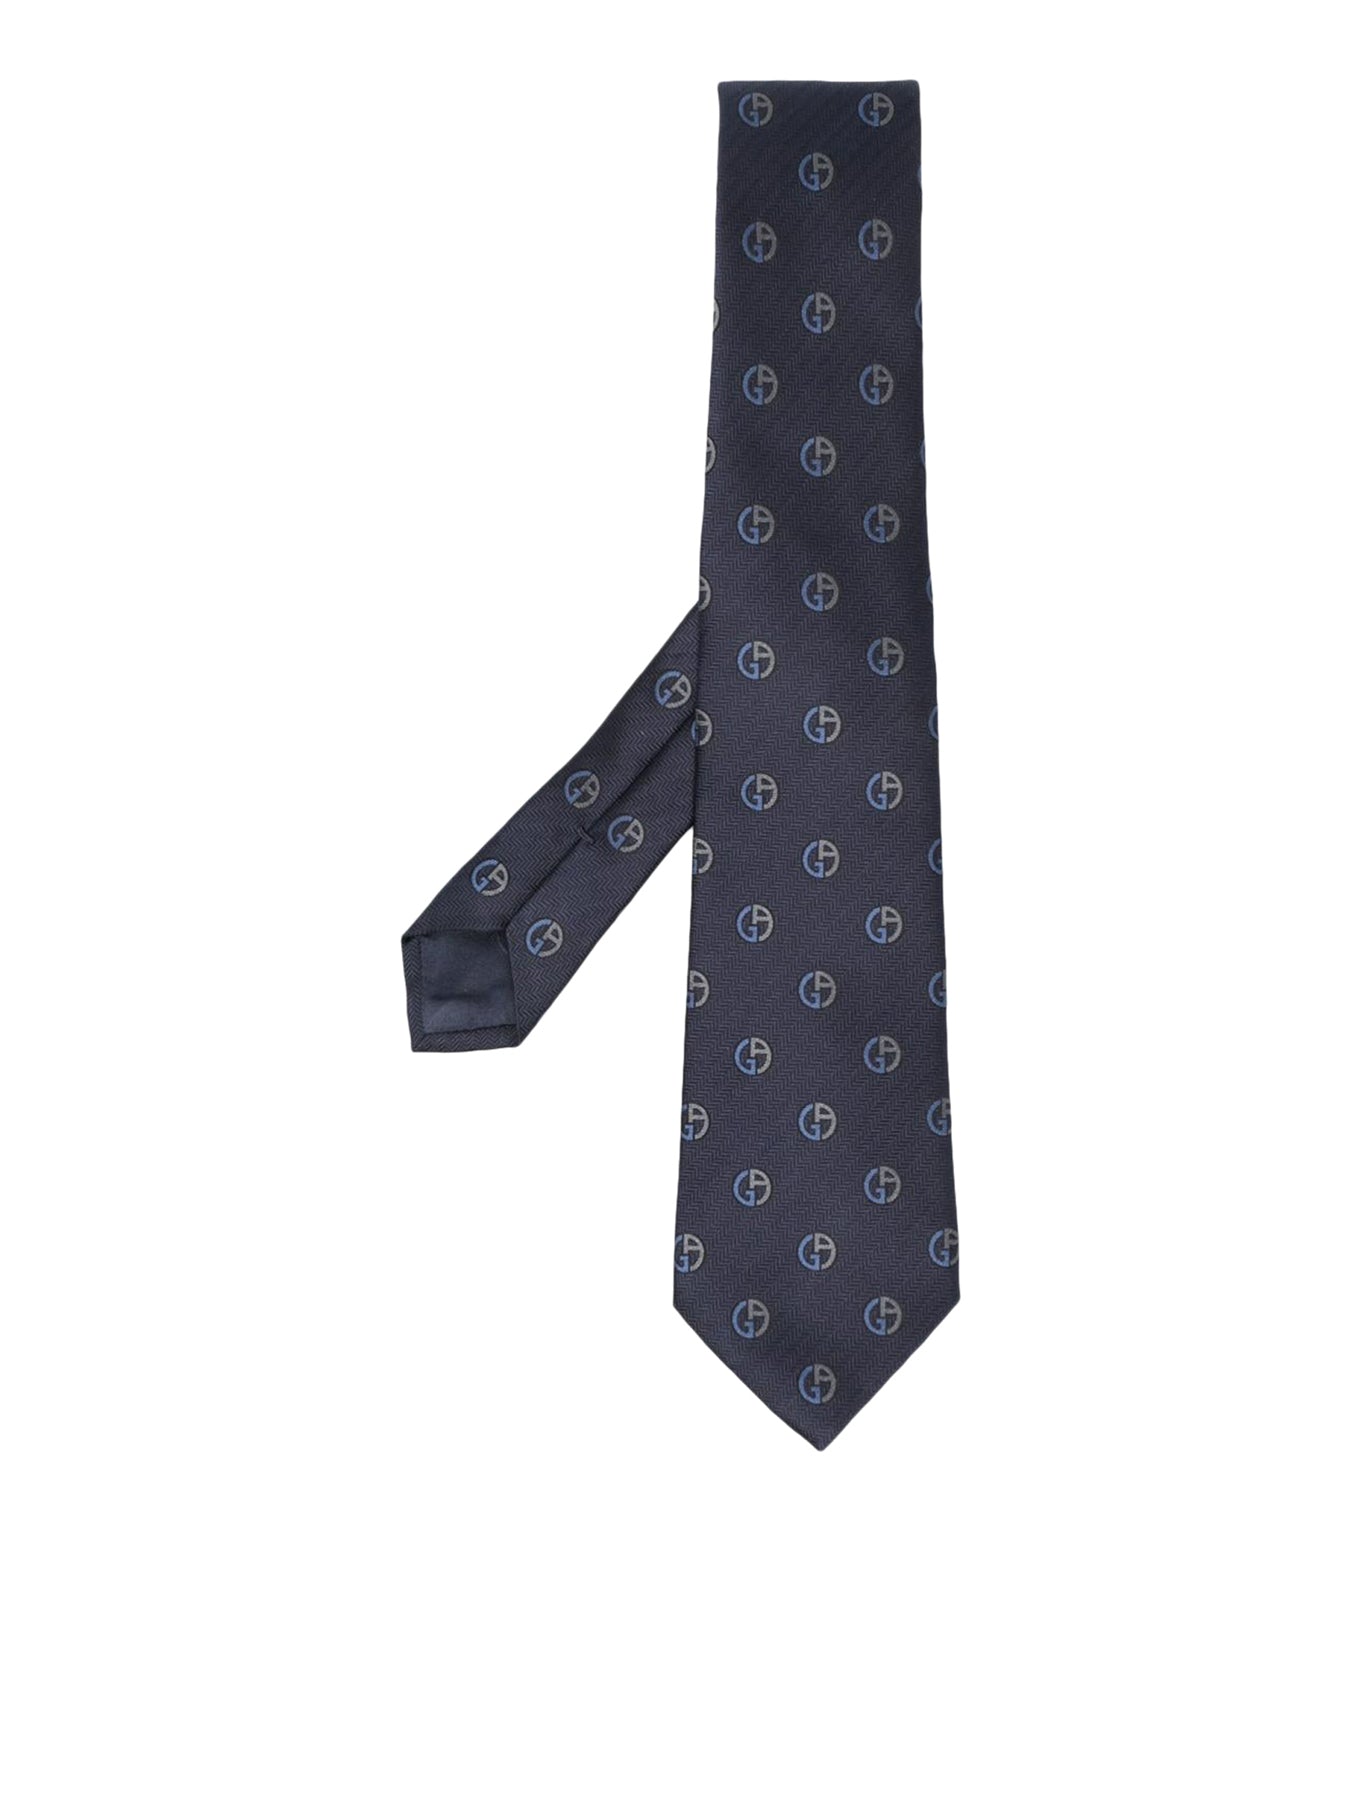 GG silk jacquard tie in light blue